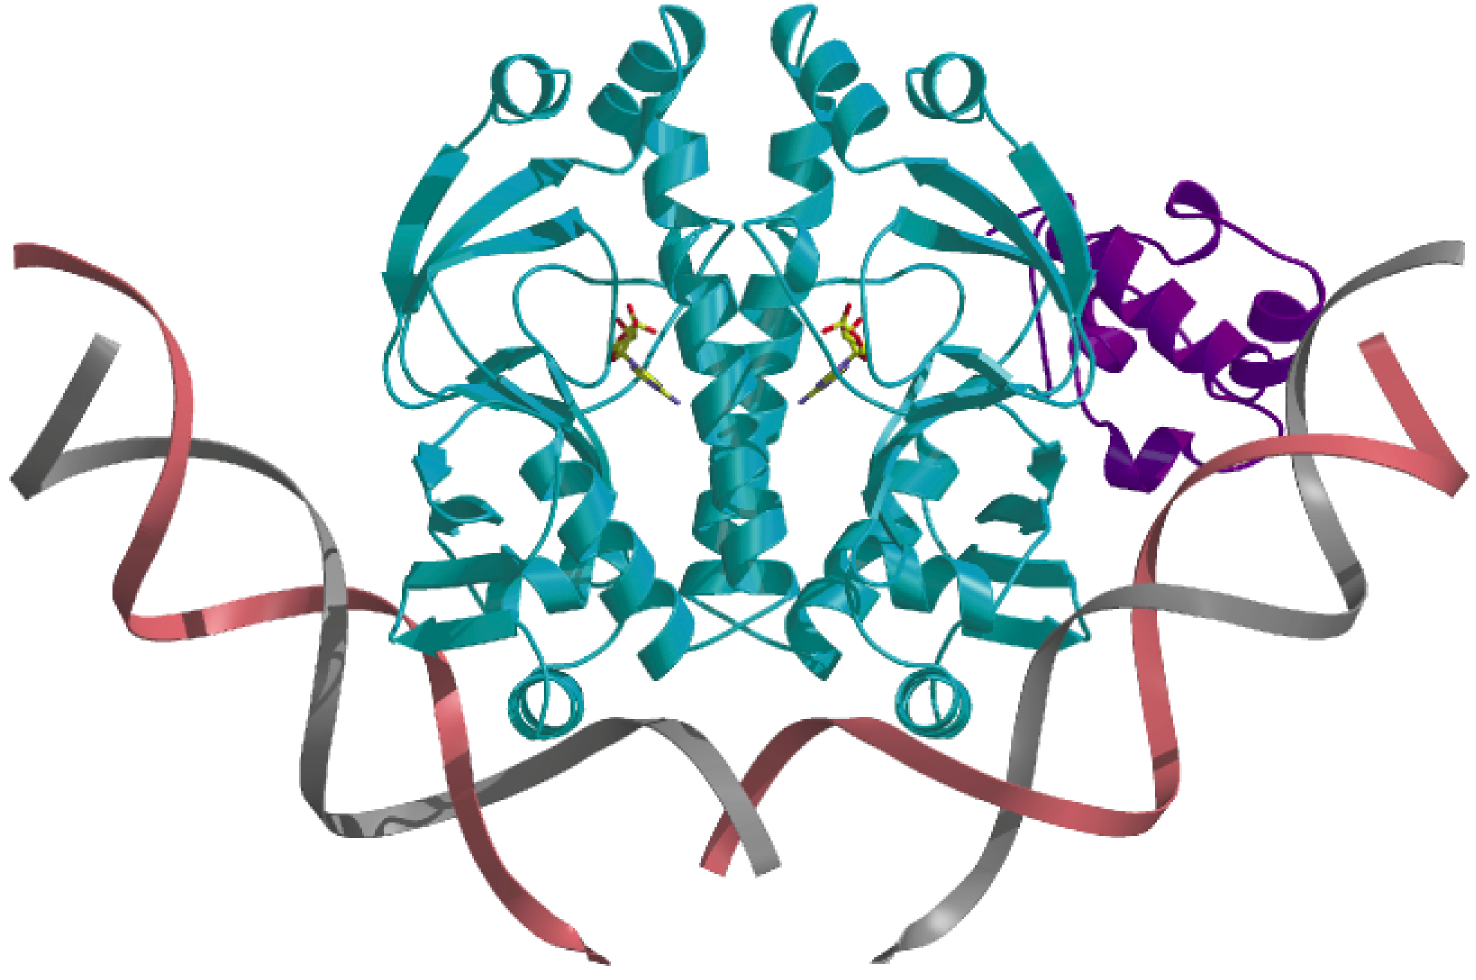 RNA polimerasi II dimeri di CAP αctd Il regolatore CAP ha domini distinti